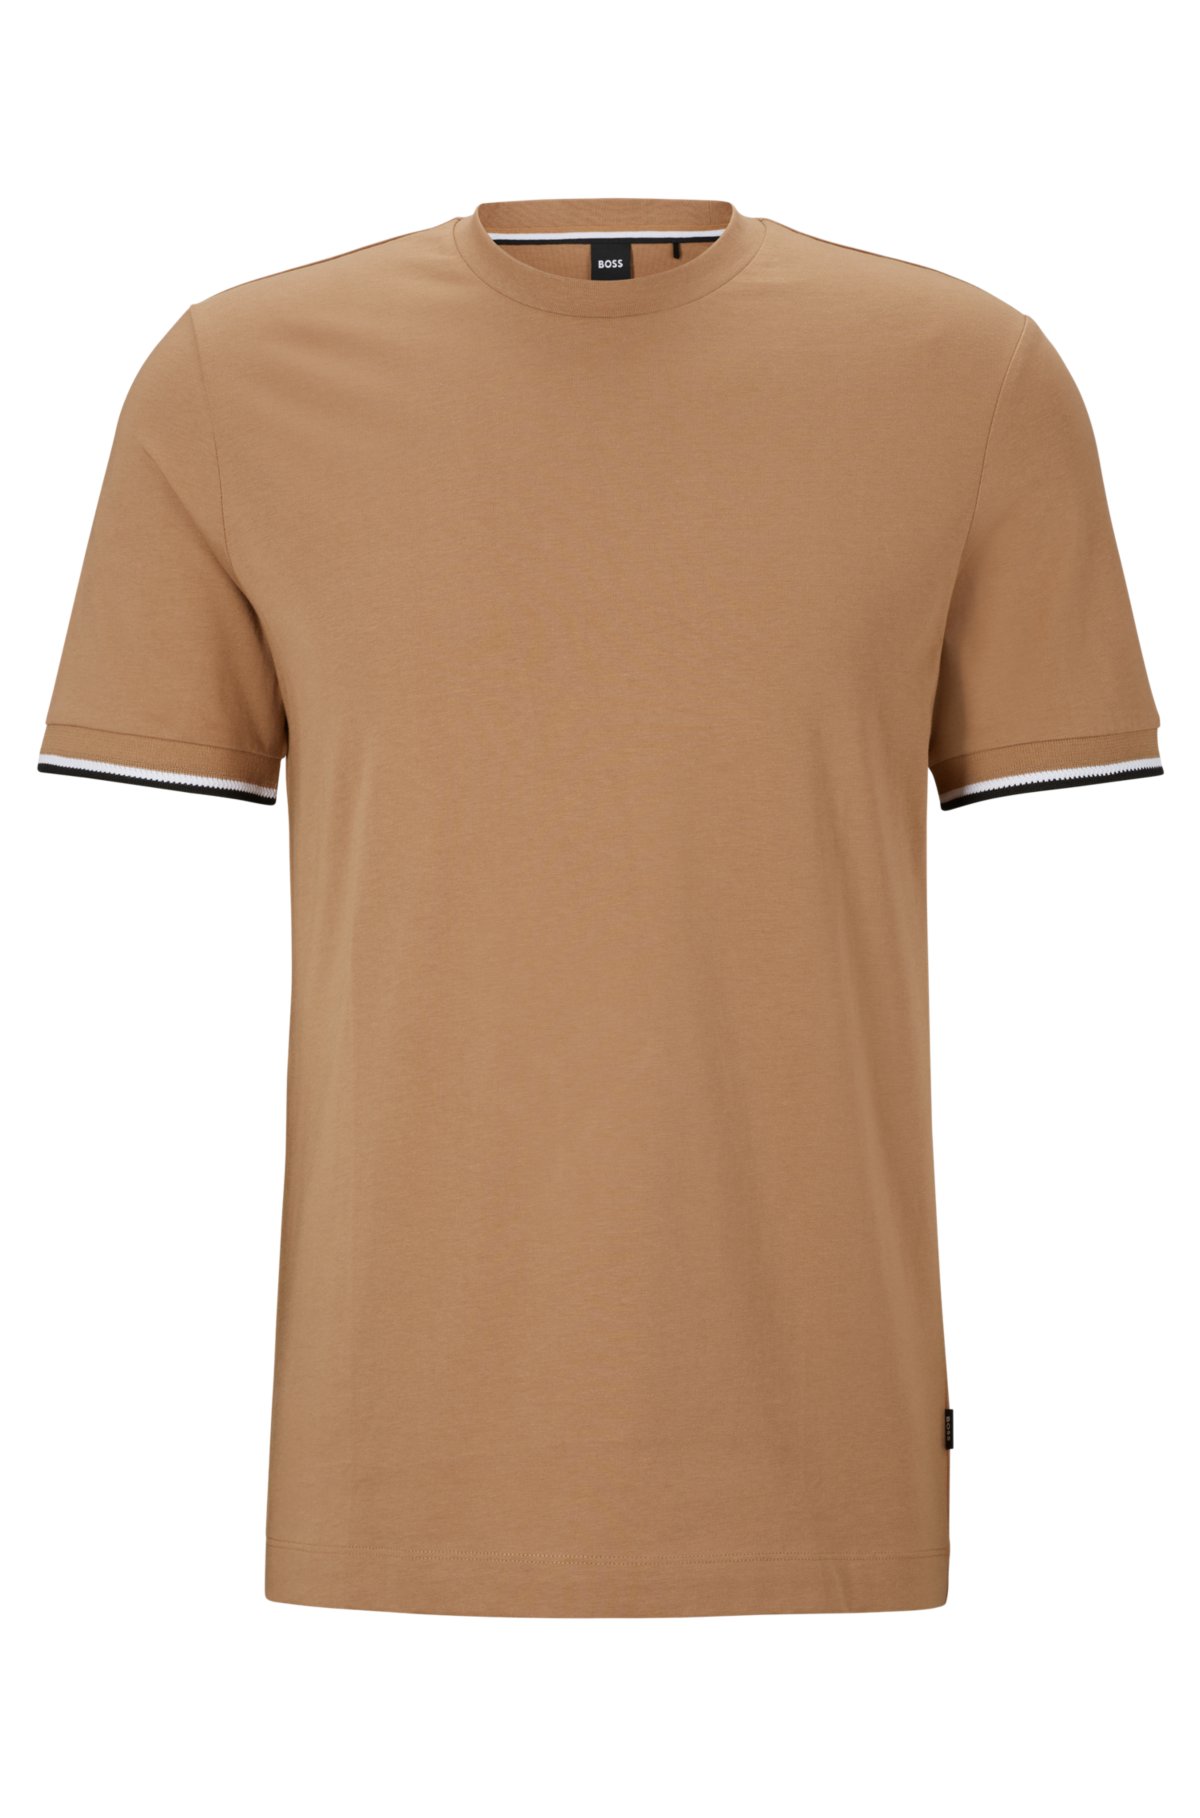 Cotton-jersey T-shirt with signature-stripe cuffs, Beige